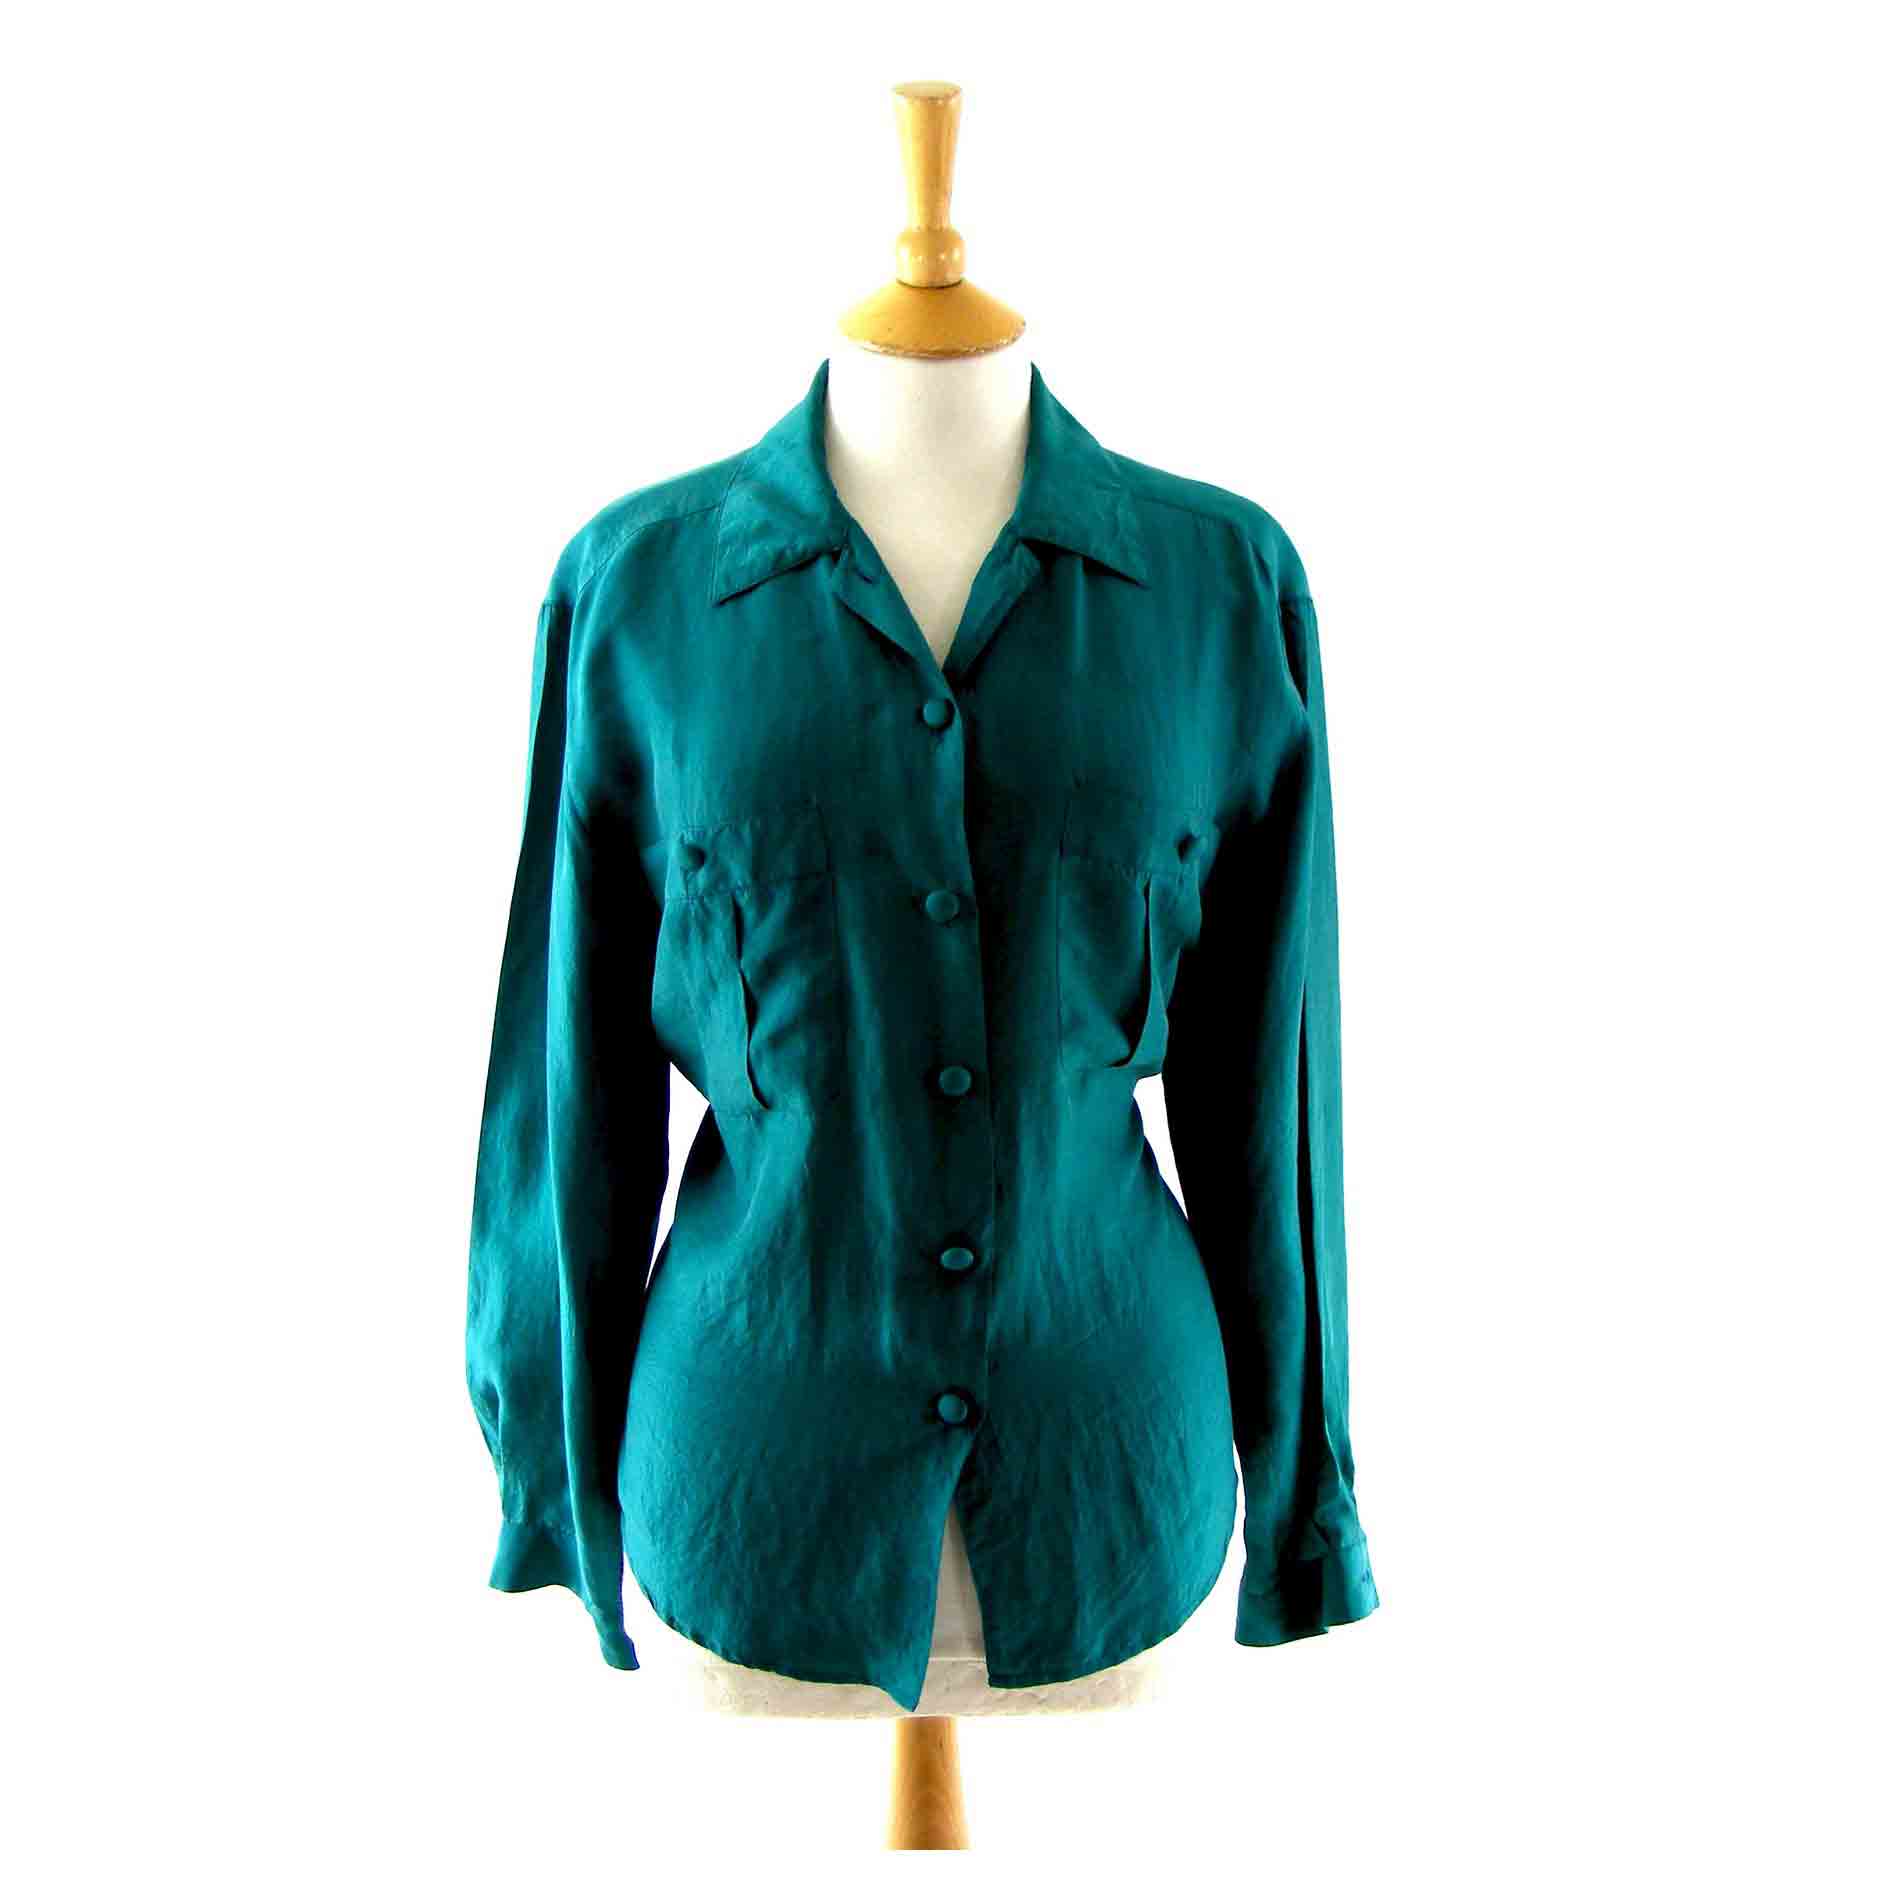 Turquoise silk blouse - Blue 17 Vintage Clothing